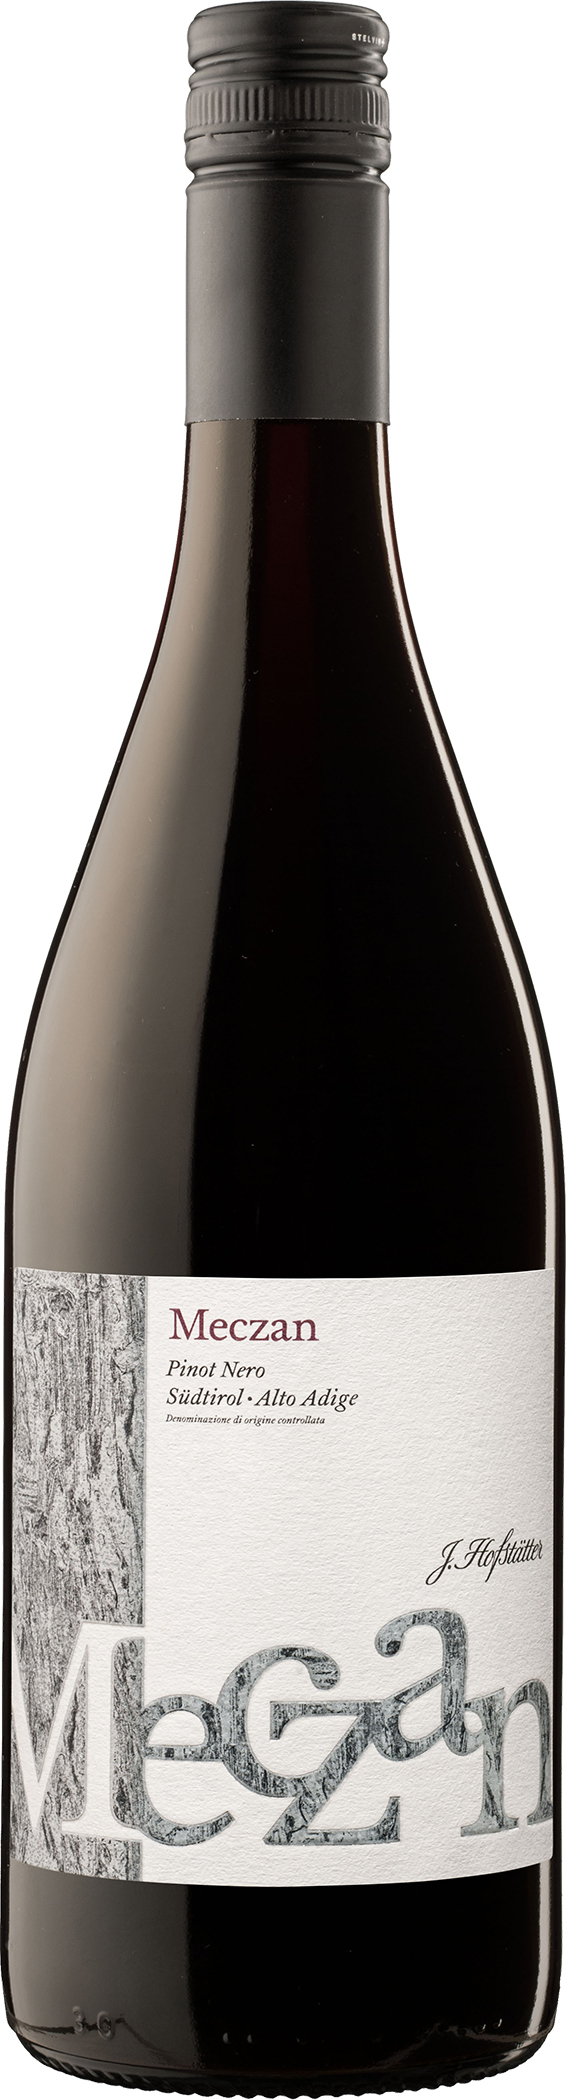 J.Hofstatter Meczan Pinot Nero 20　ｼﾞｮｾﾌﾎﾌｽﾀｯﾀｰﾋﾟﾉﾈﾛ